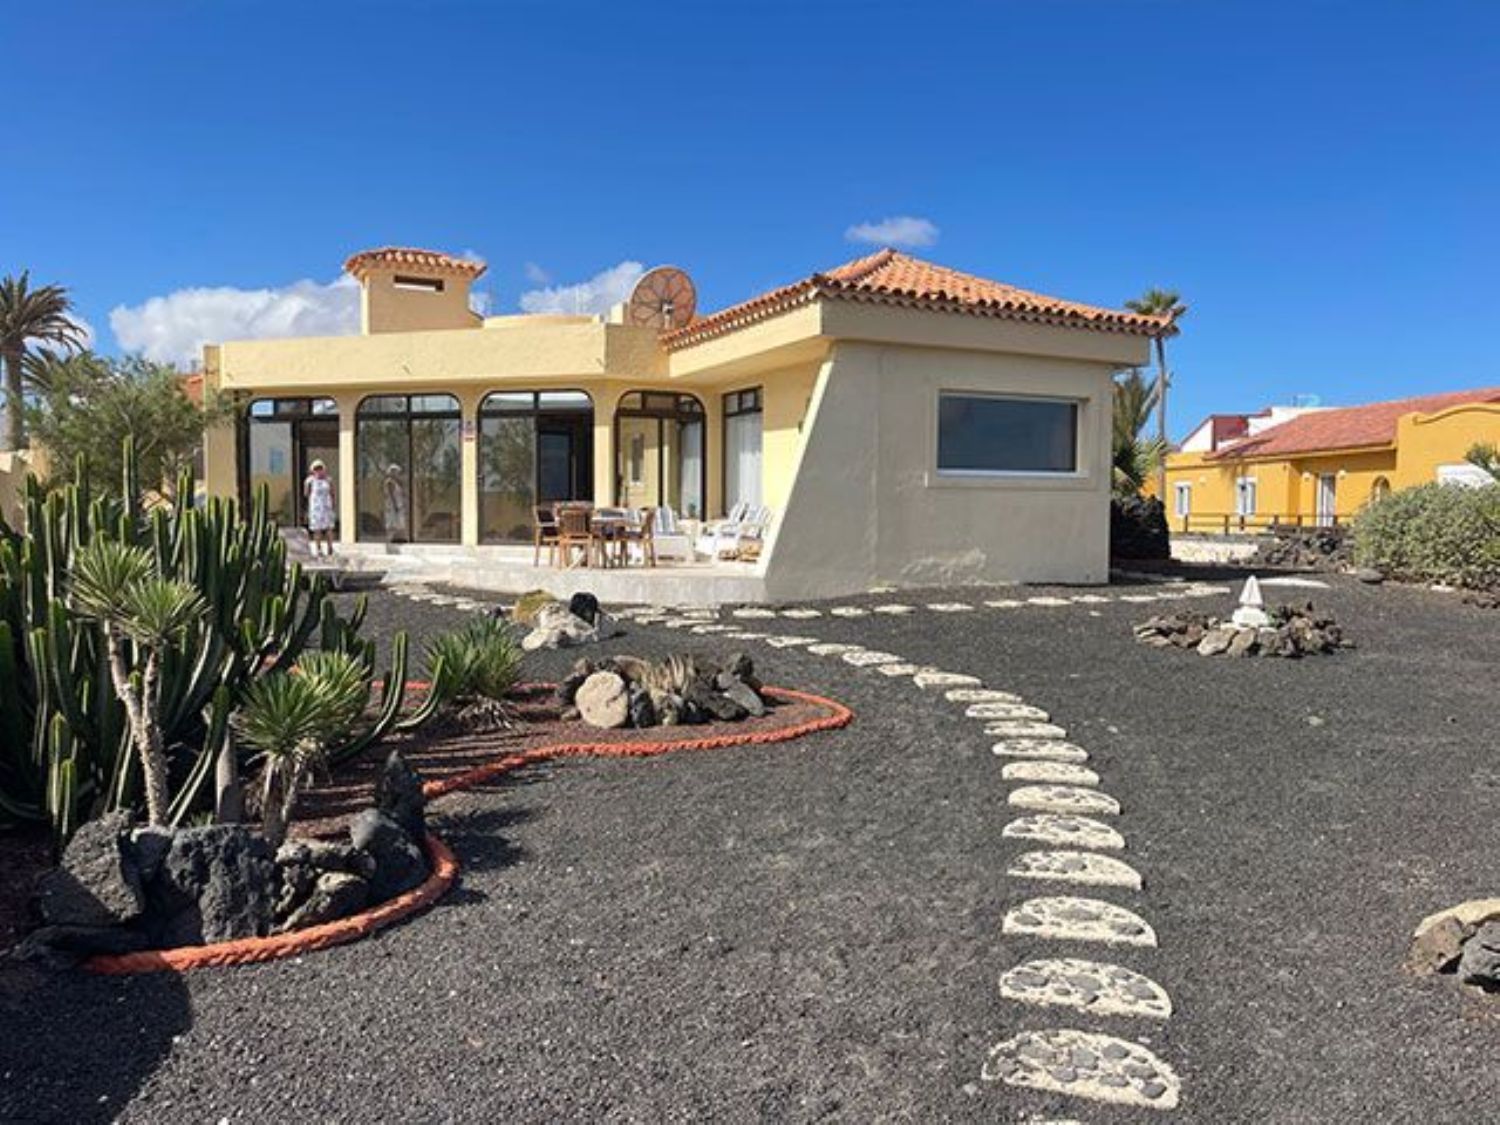 Semi-detached house for sale in first sea line in Las Agujas, La Oliva